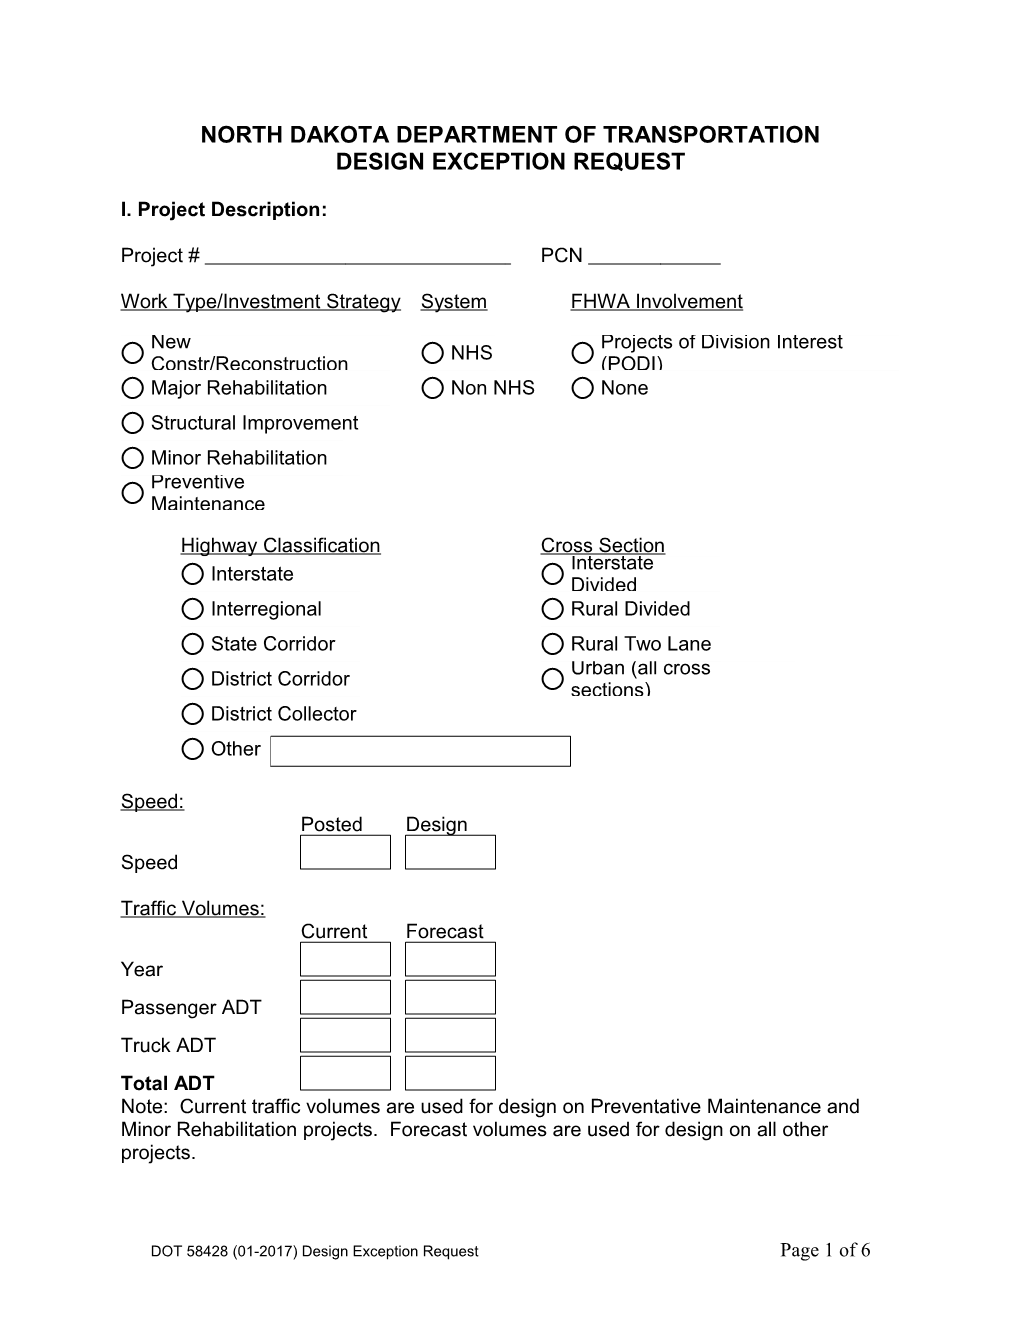 Design Exception Request *